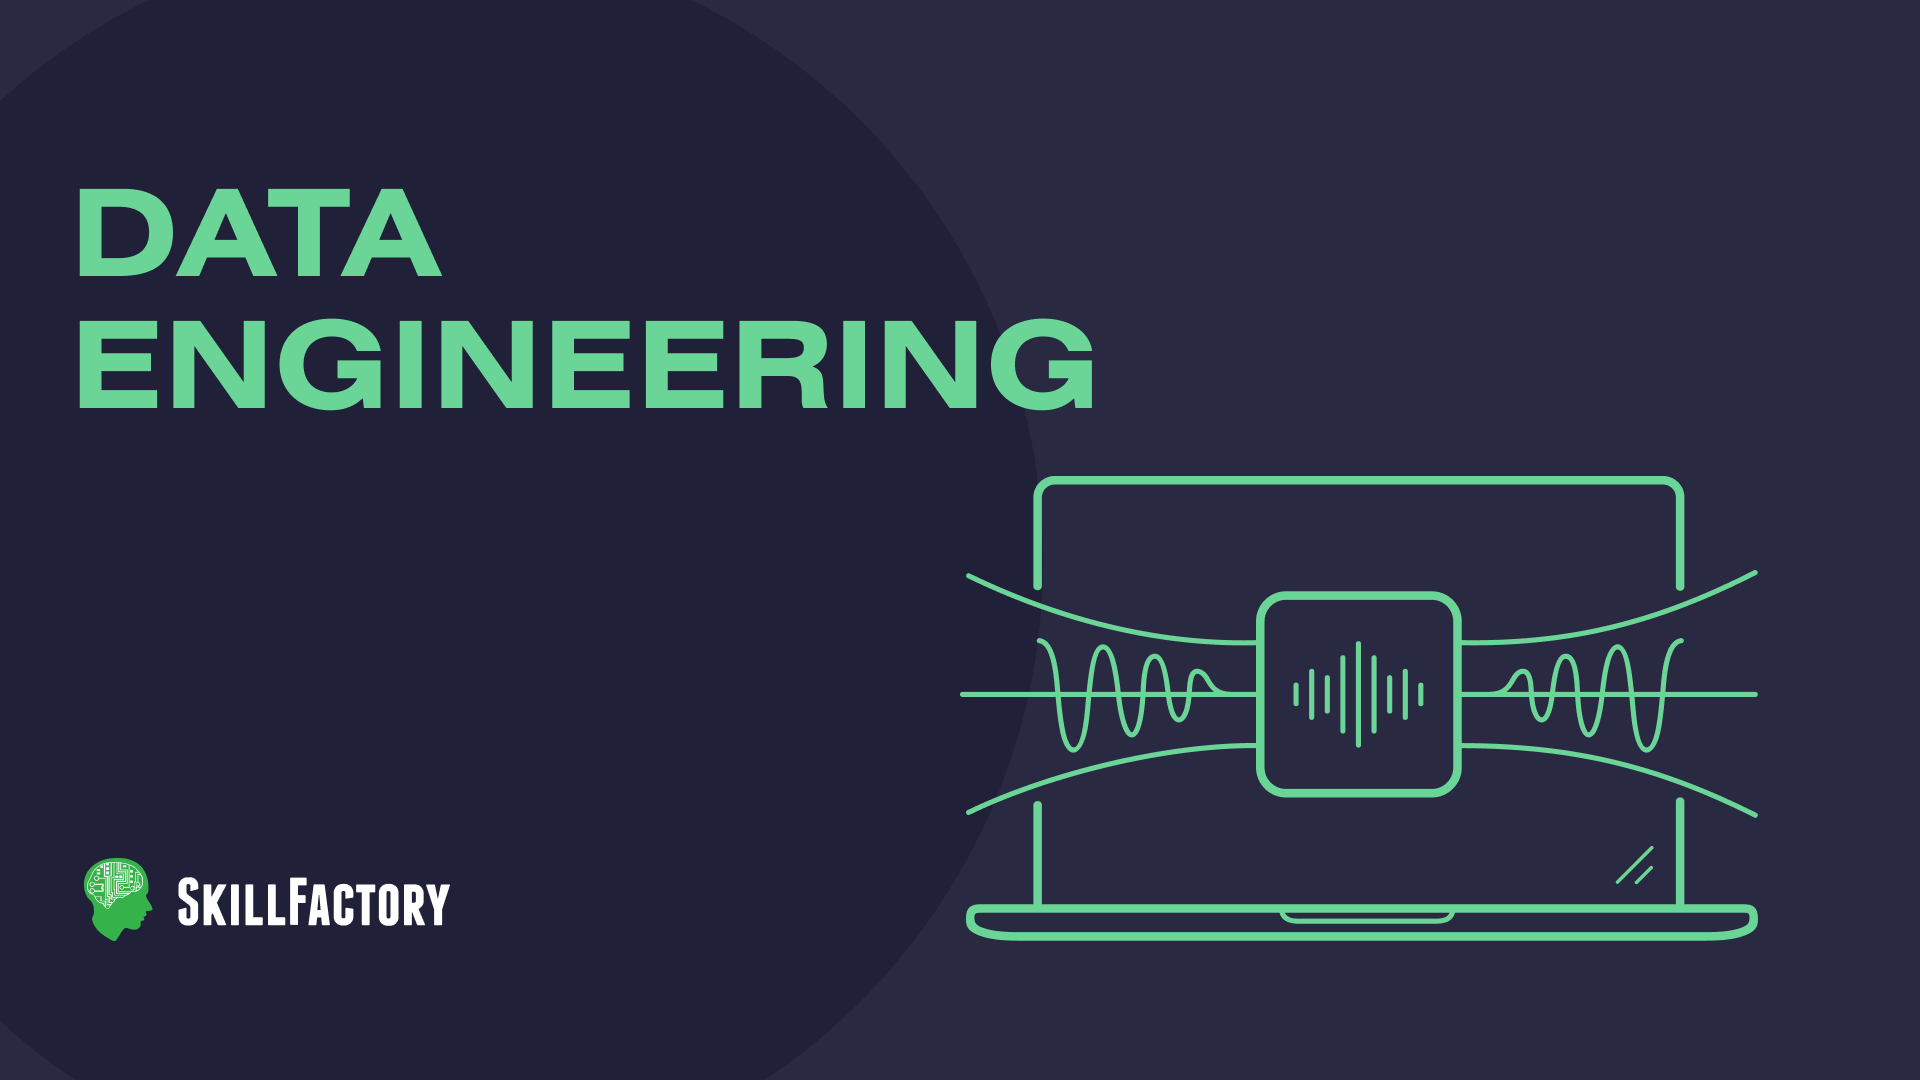 Data Engineering факультет data engineering